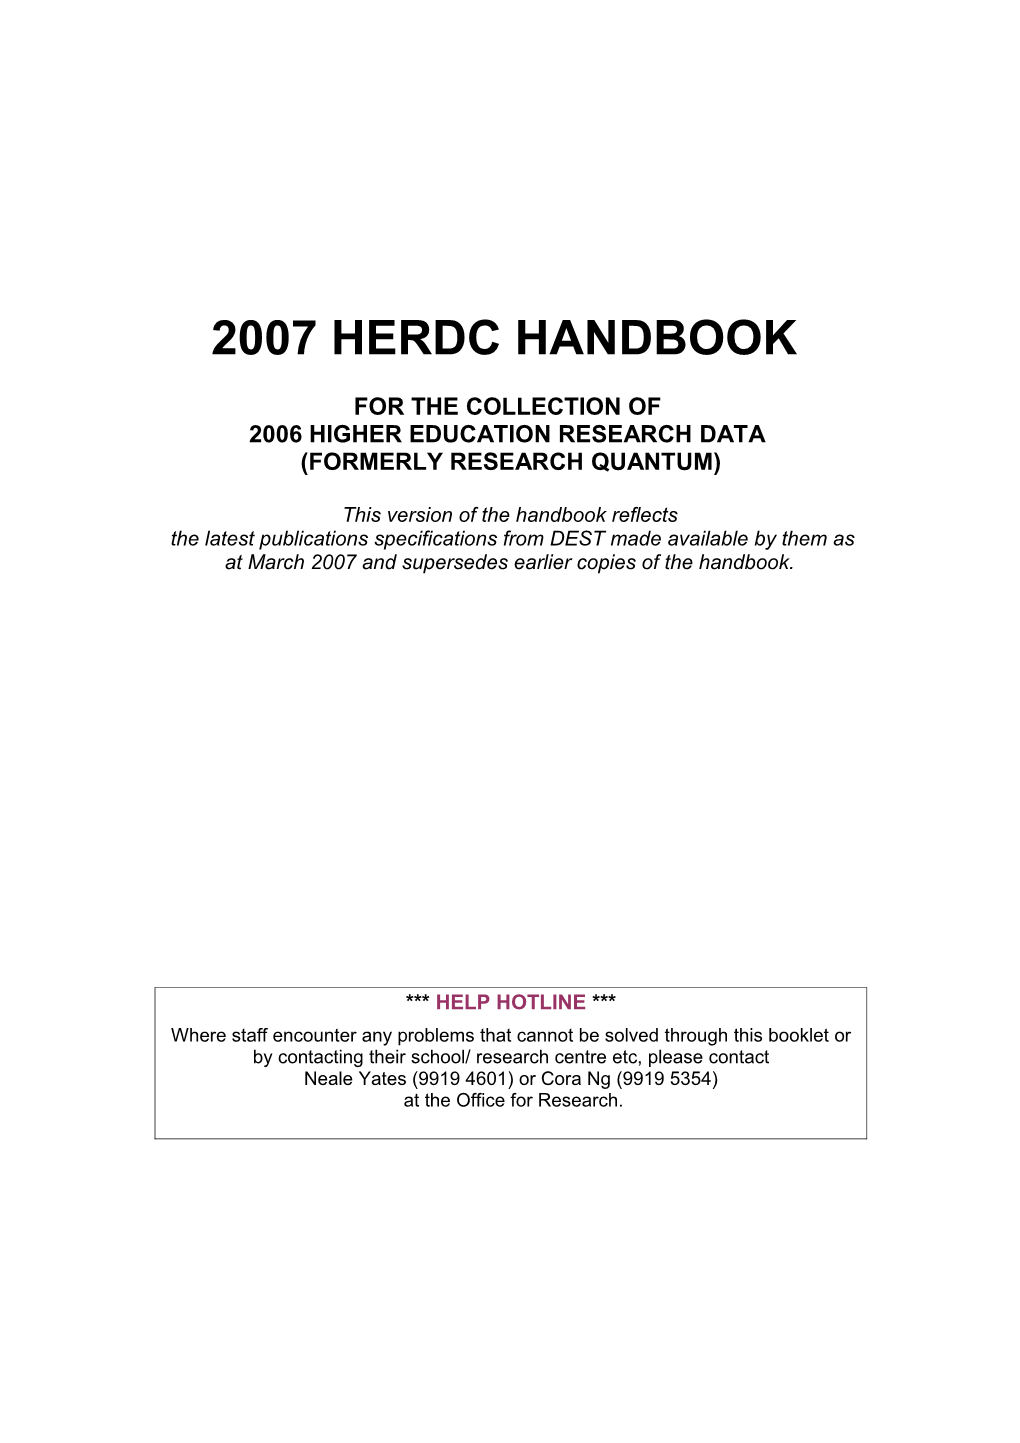 2007 Herdc Handbook